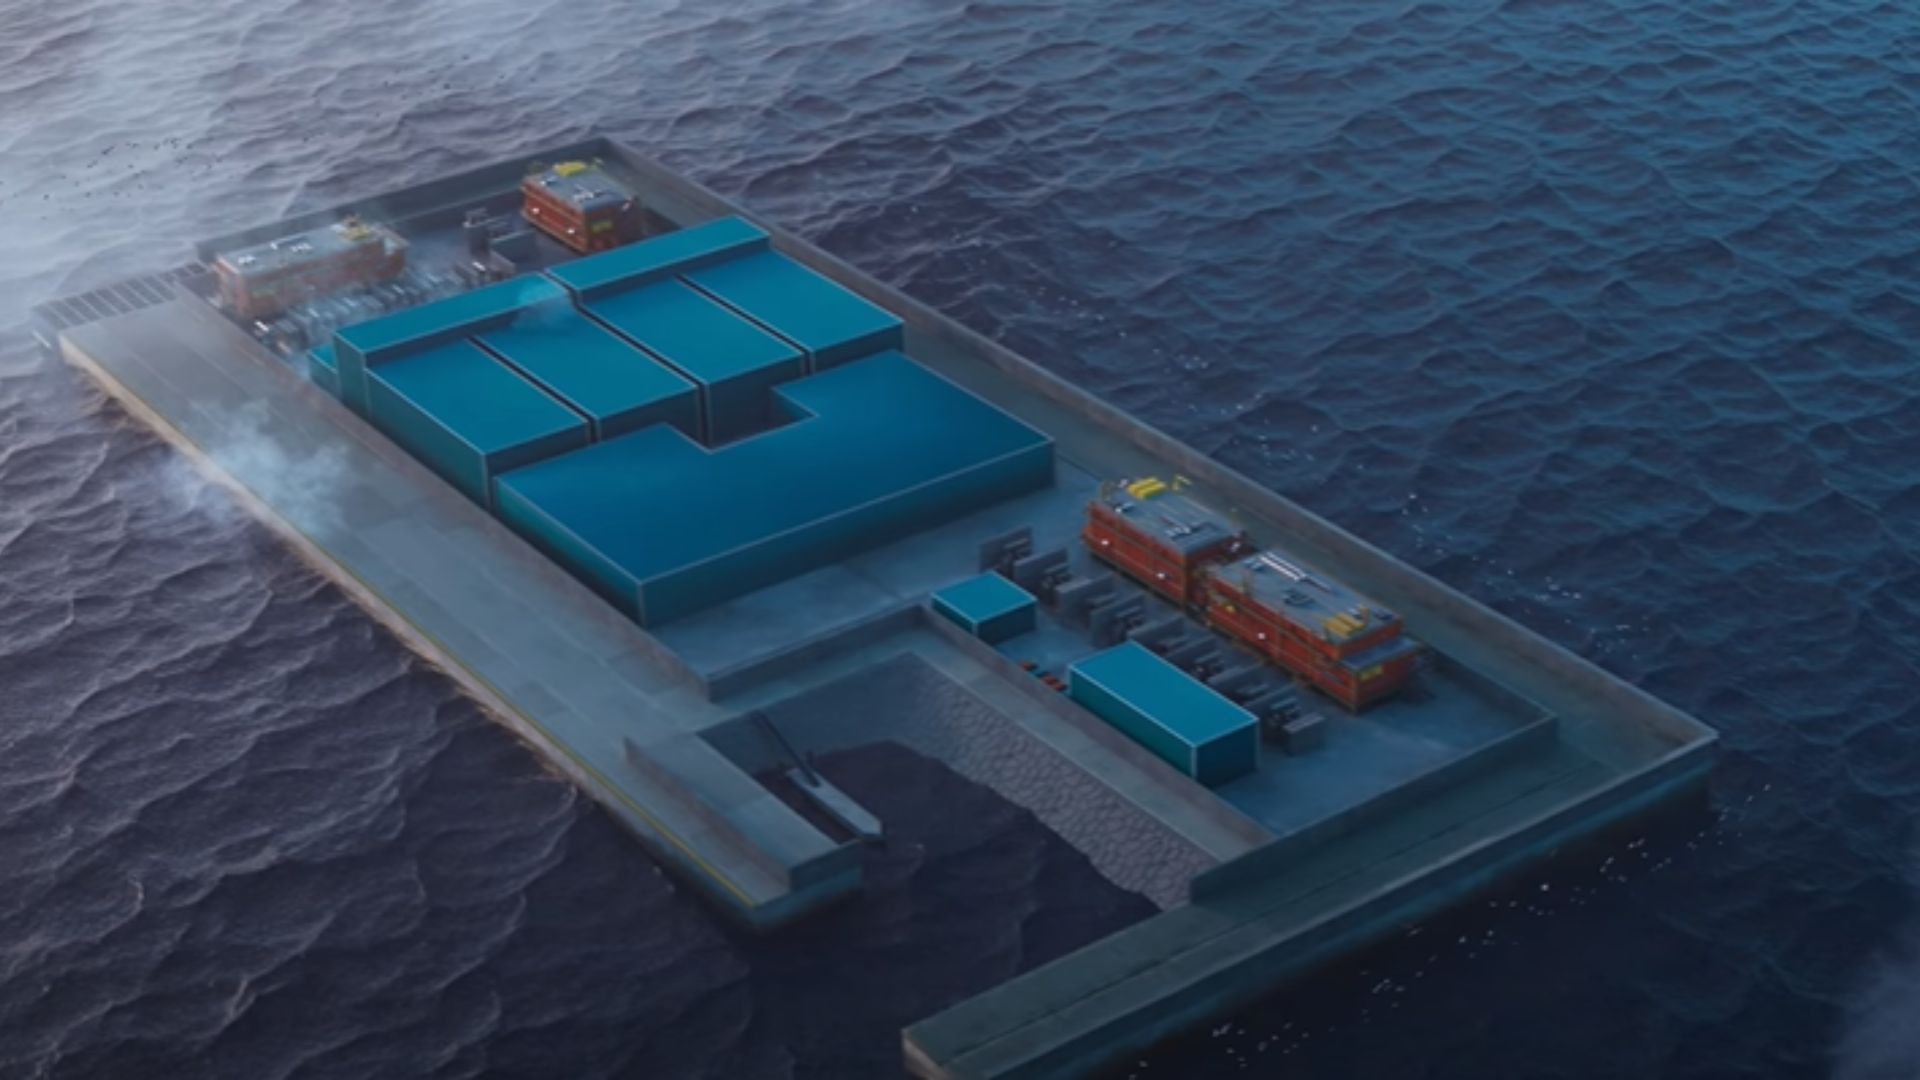 Video: Belgium starts building Worlds first artificial energy island [Video]